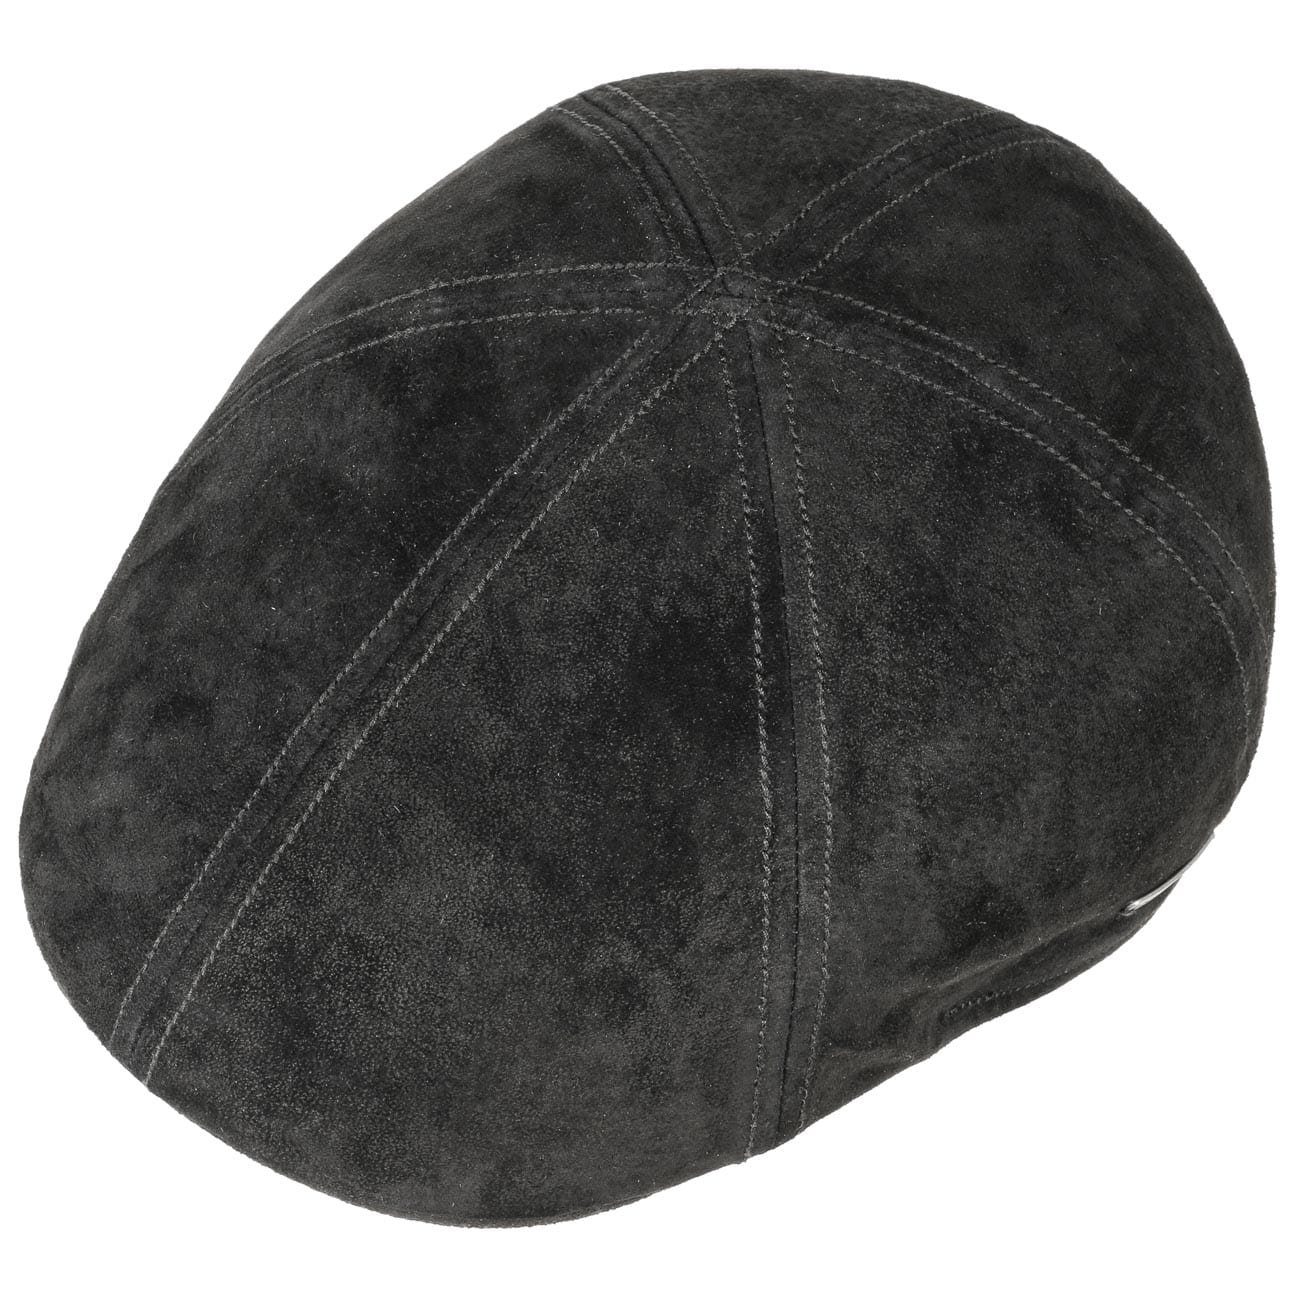 (1-St) Schirm Stetson Ledercap mit Cap Flat schwarz